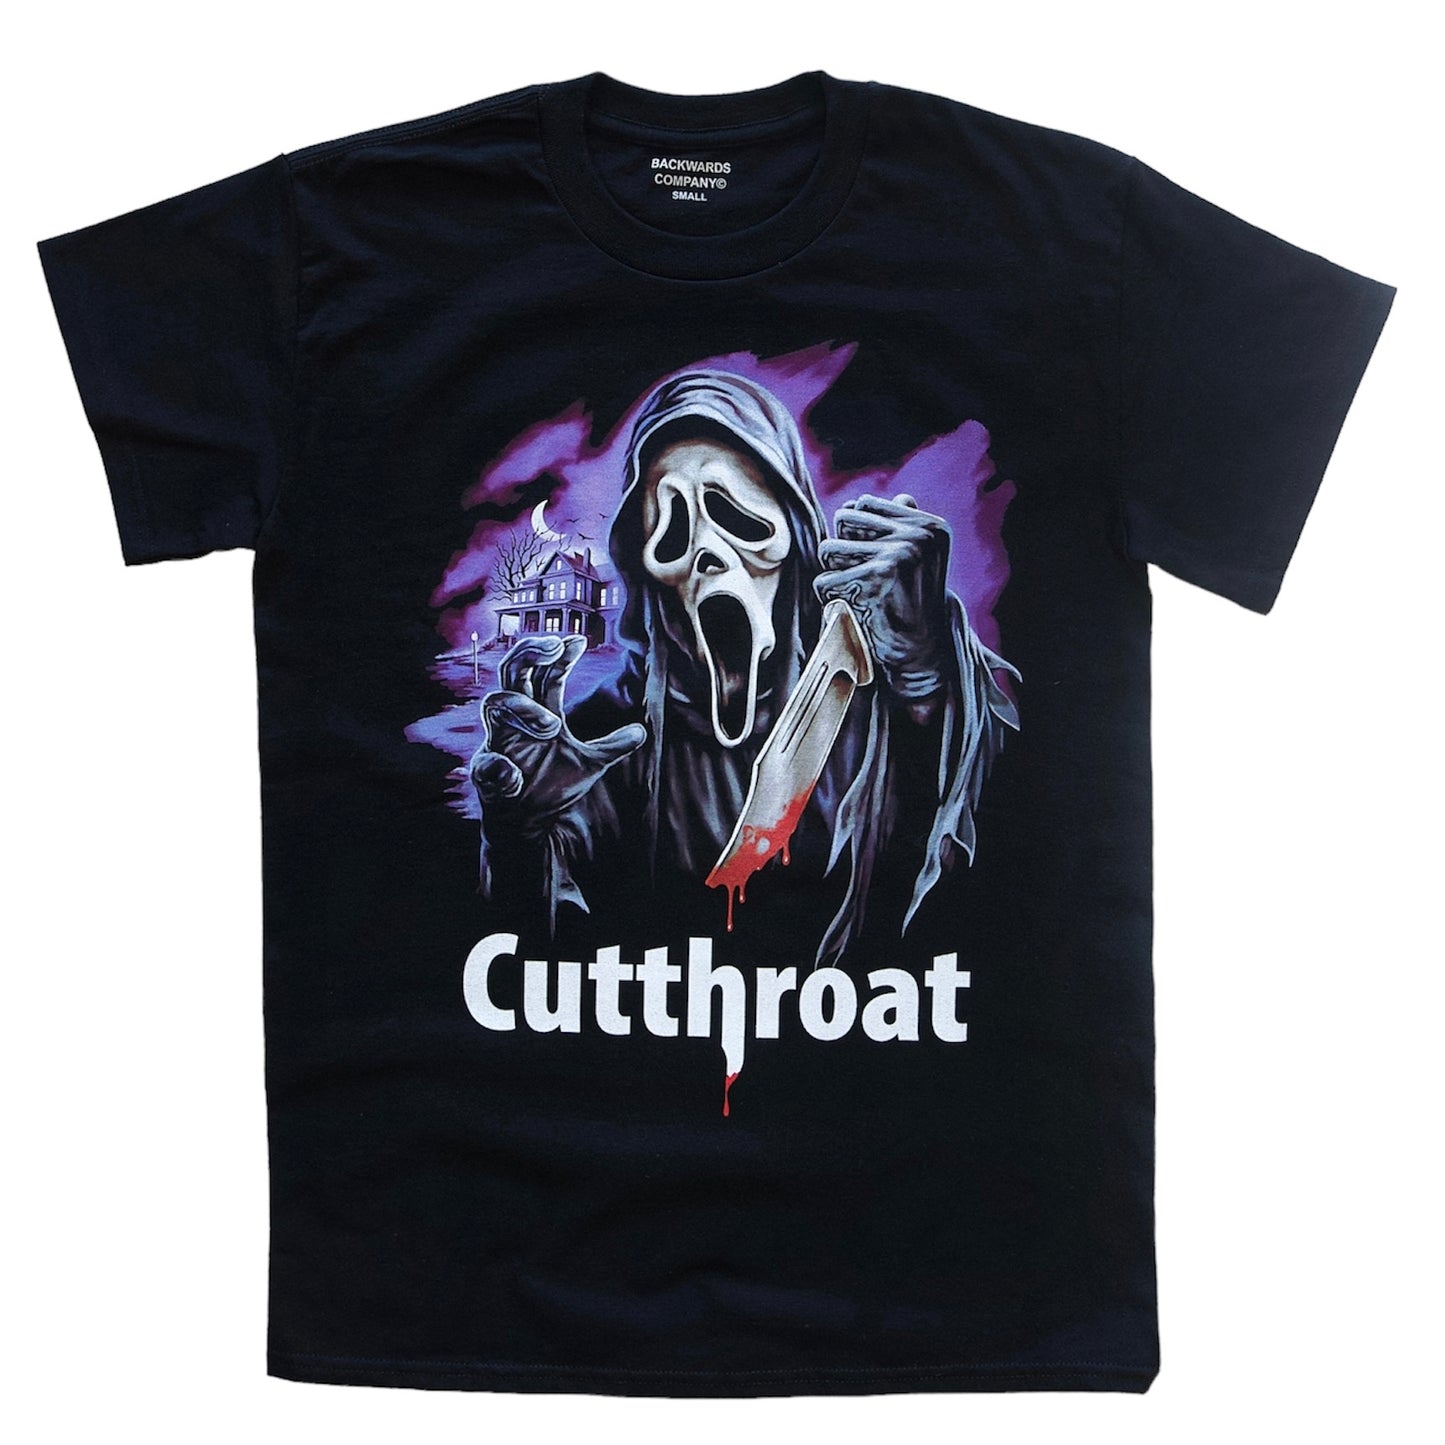 Black “Cutthroat Ghostface” T-Shirt